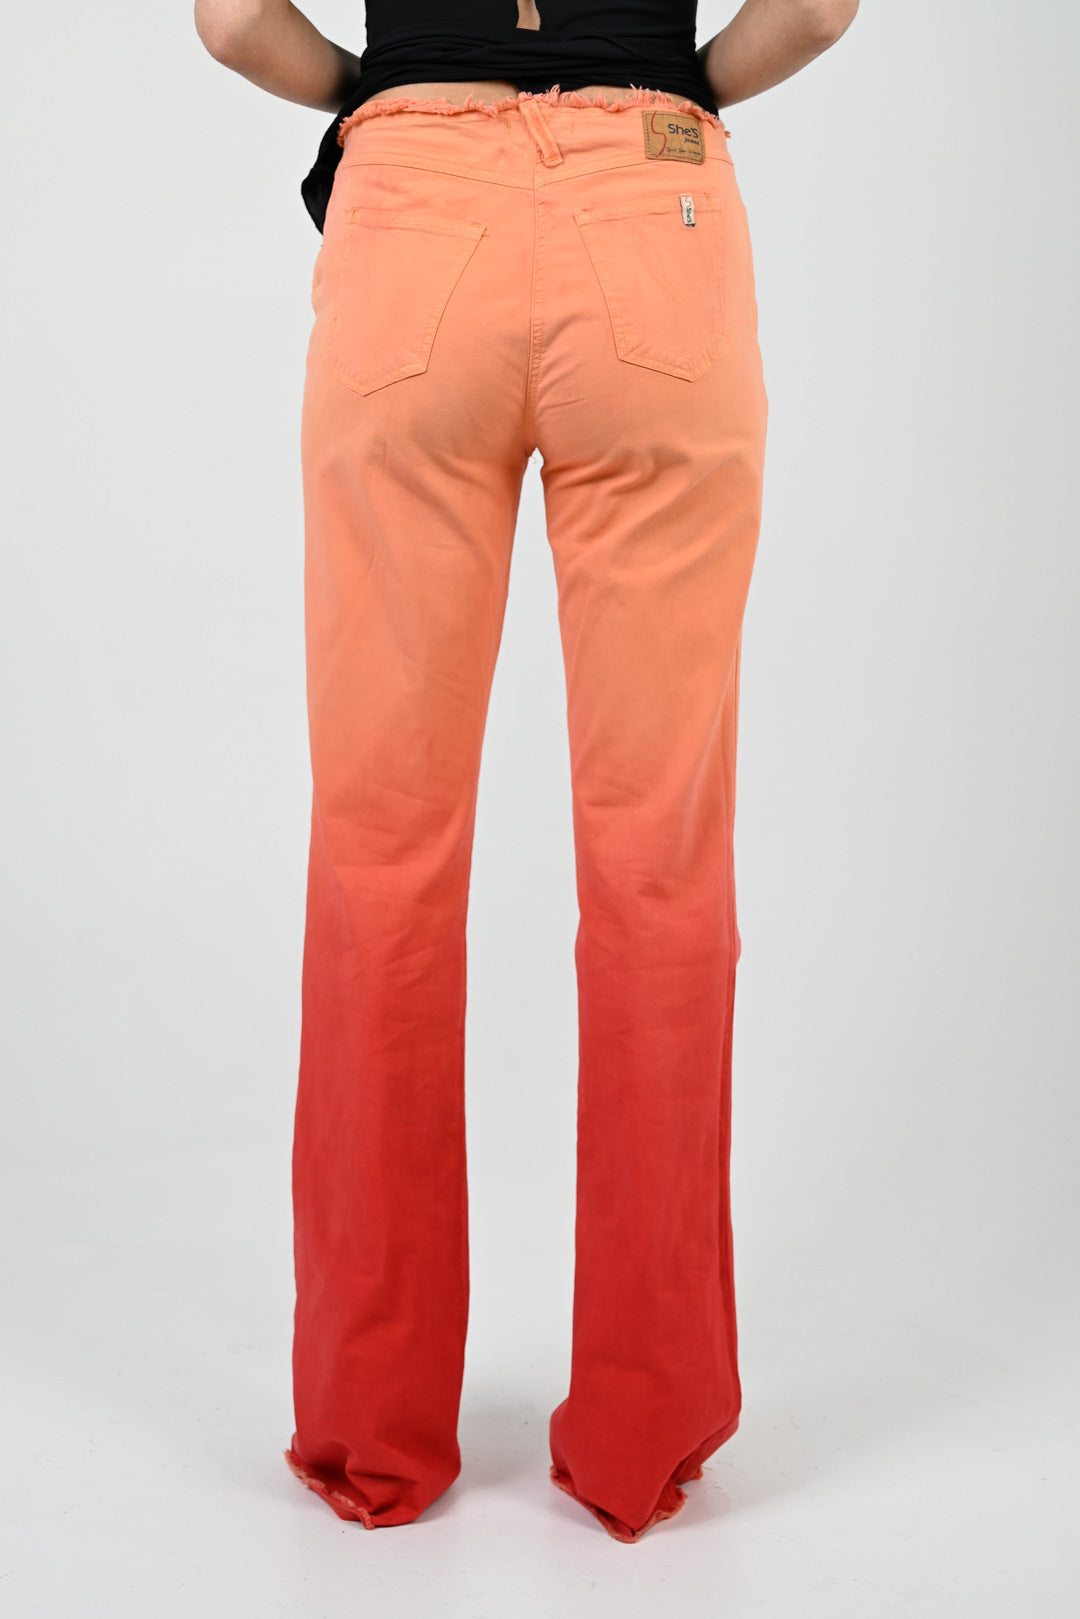 Tangerine Ombre Pants